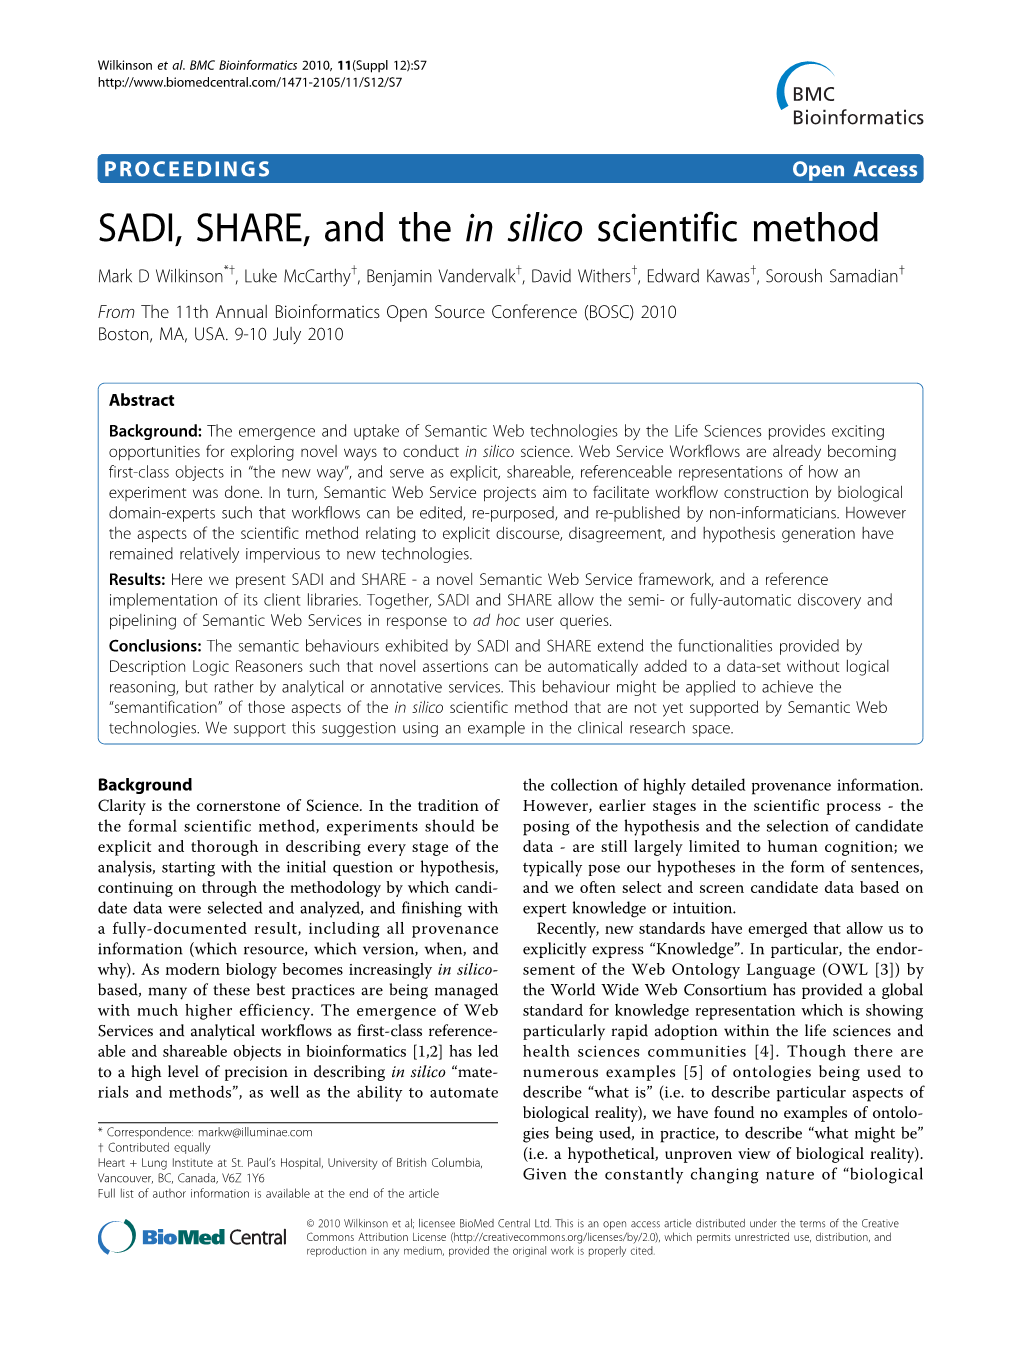 SADI, SHARE, and the in Silico Scientific Method